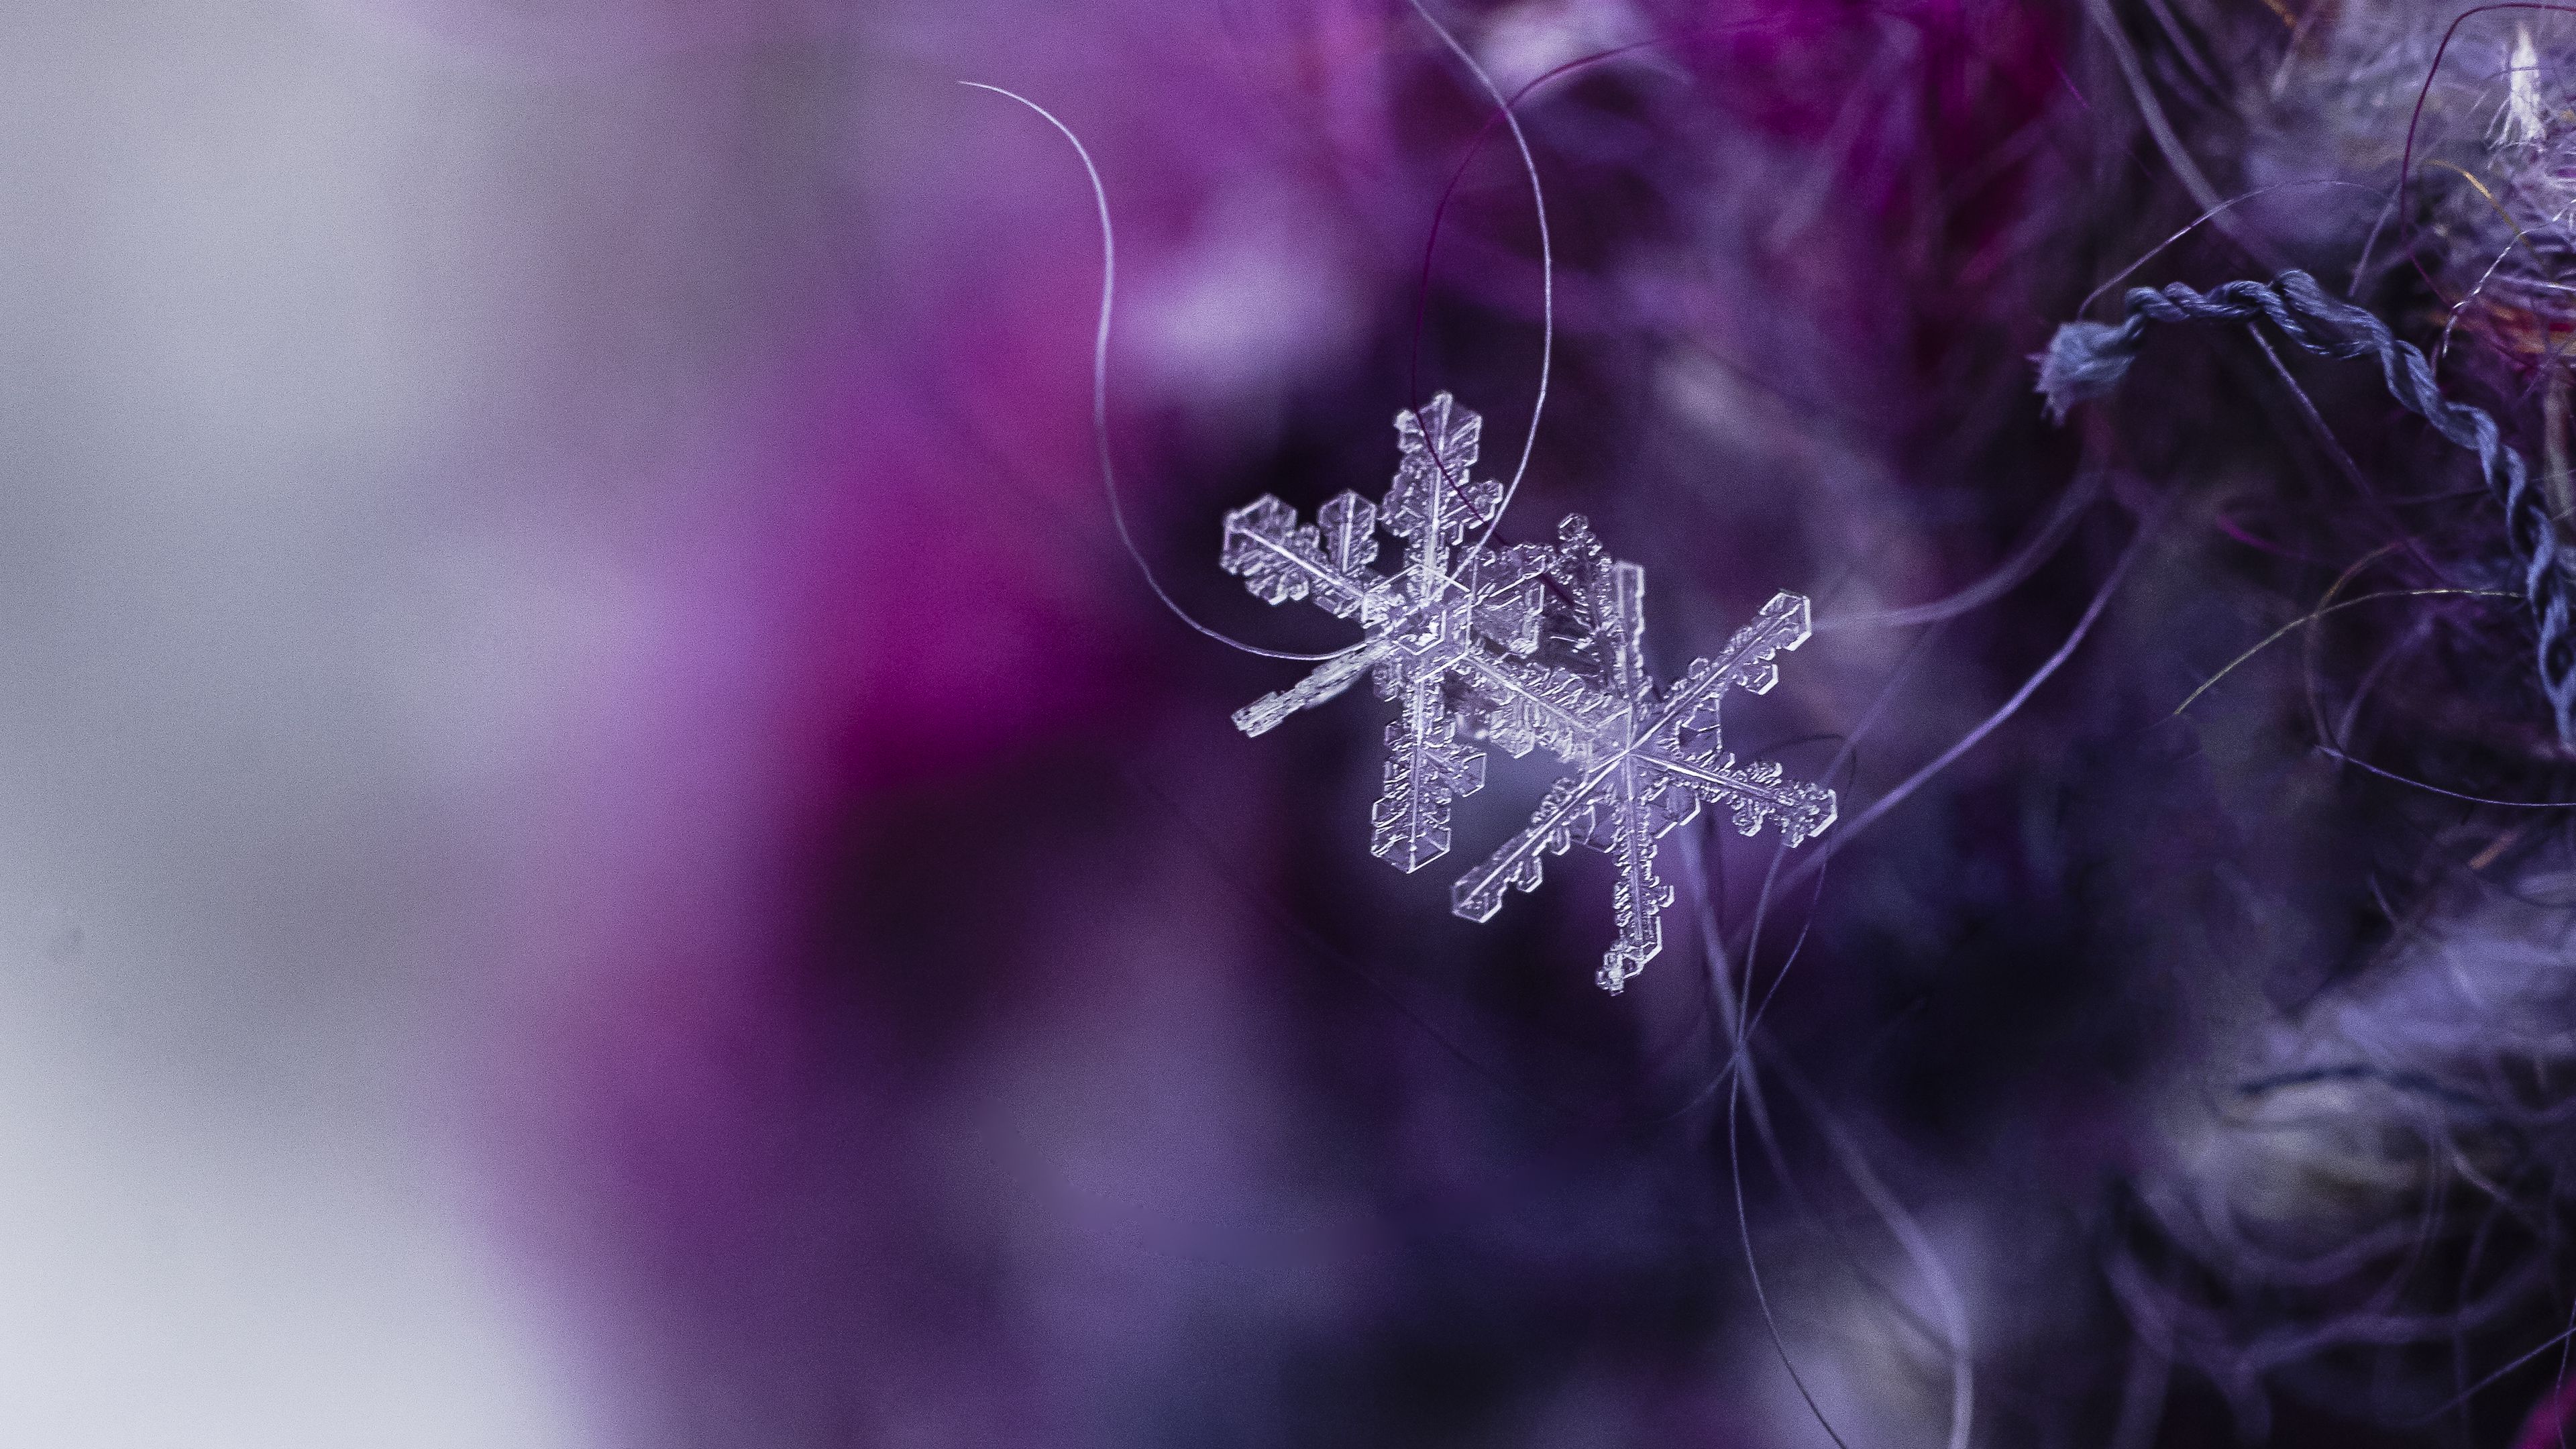 Download Wallpaper 3840x2160 Snowflakes Crystals Ice Macro 4k Uhd 16